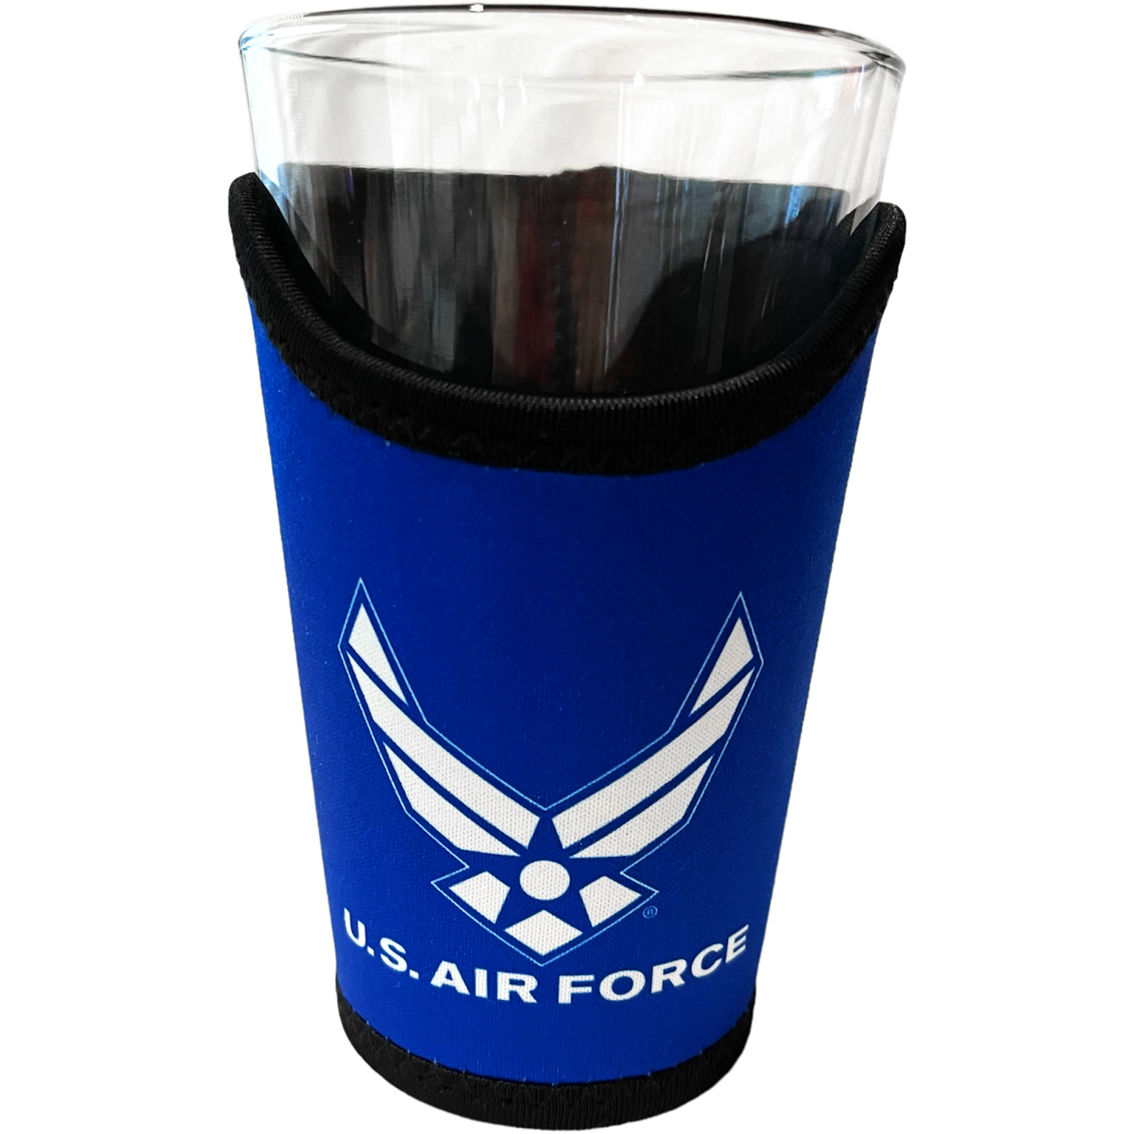 KaDNZ US Air Force Pint Glass Koozie 16 oz.